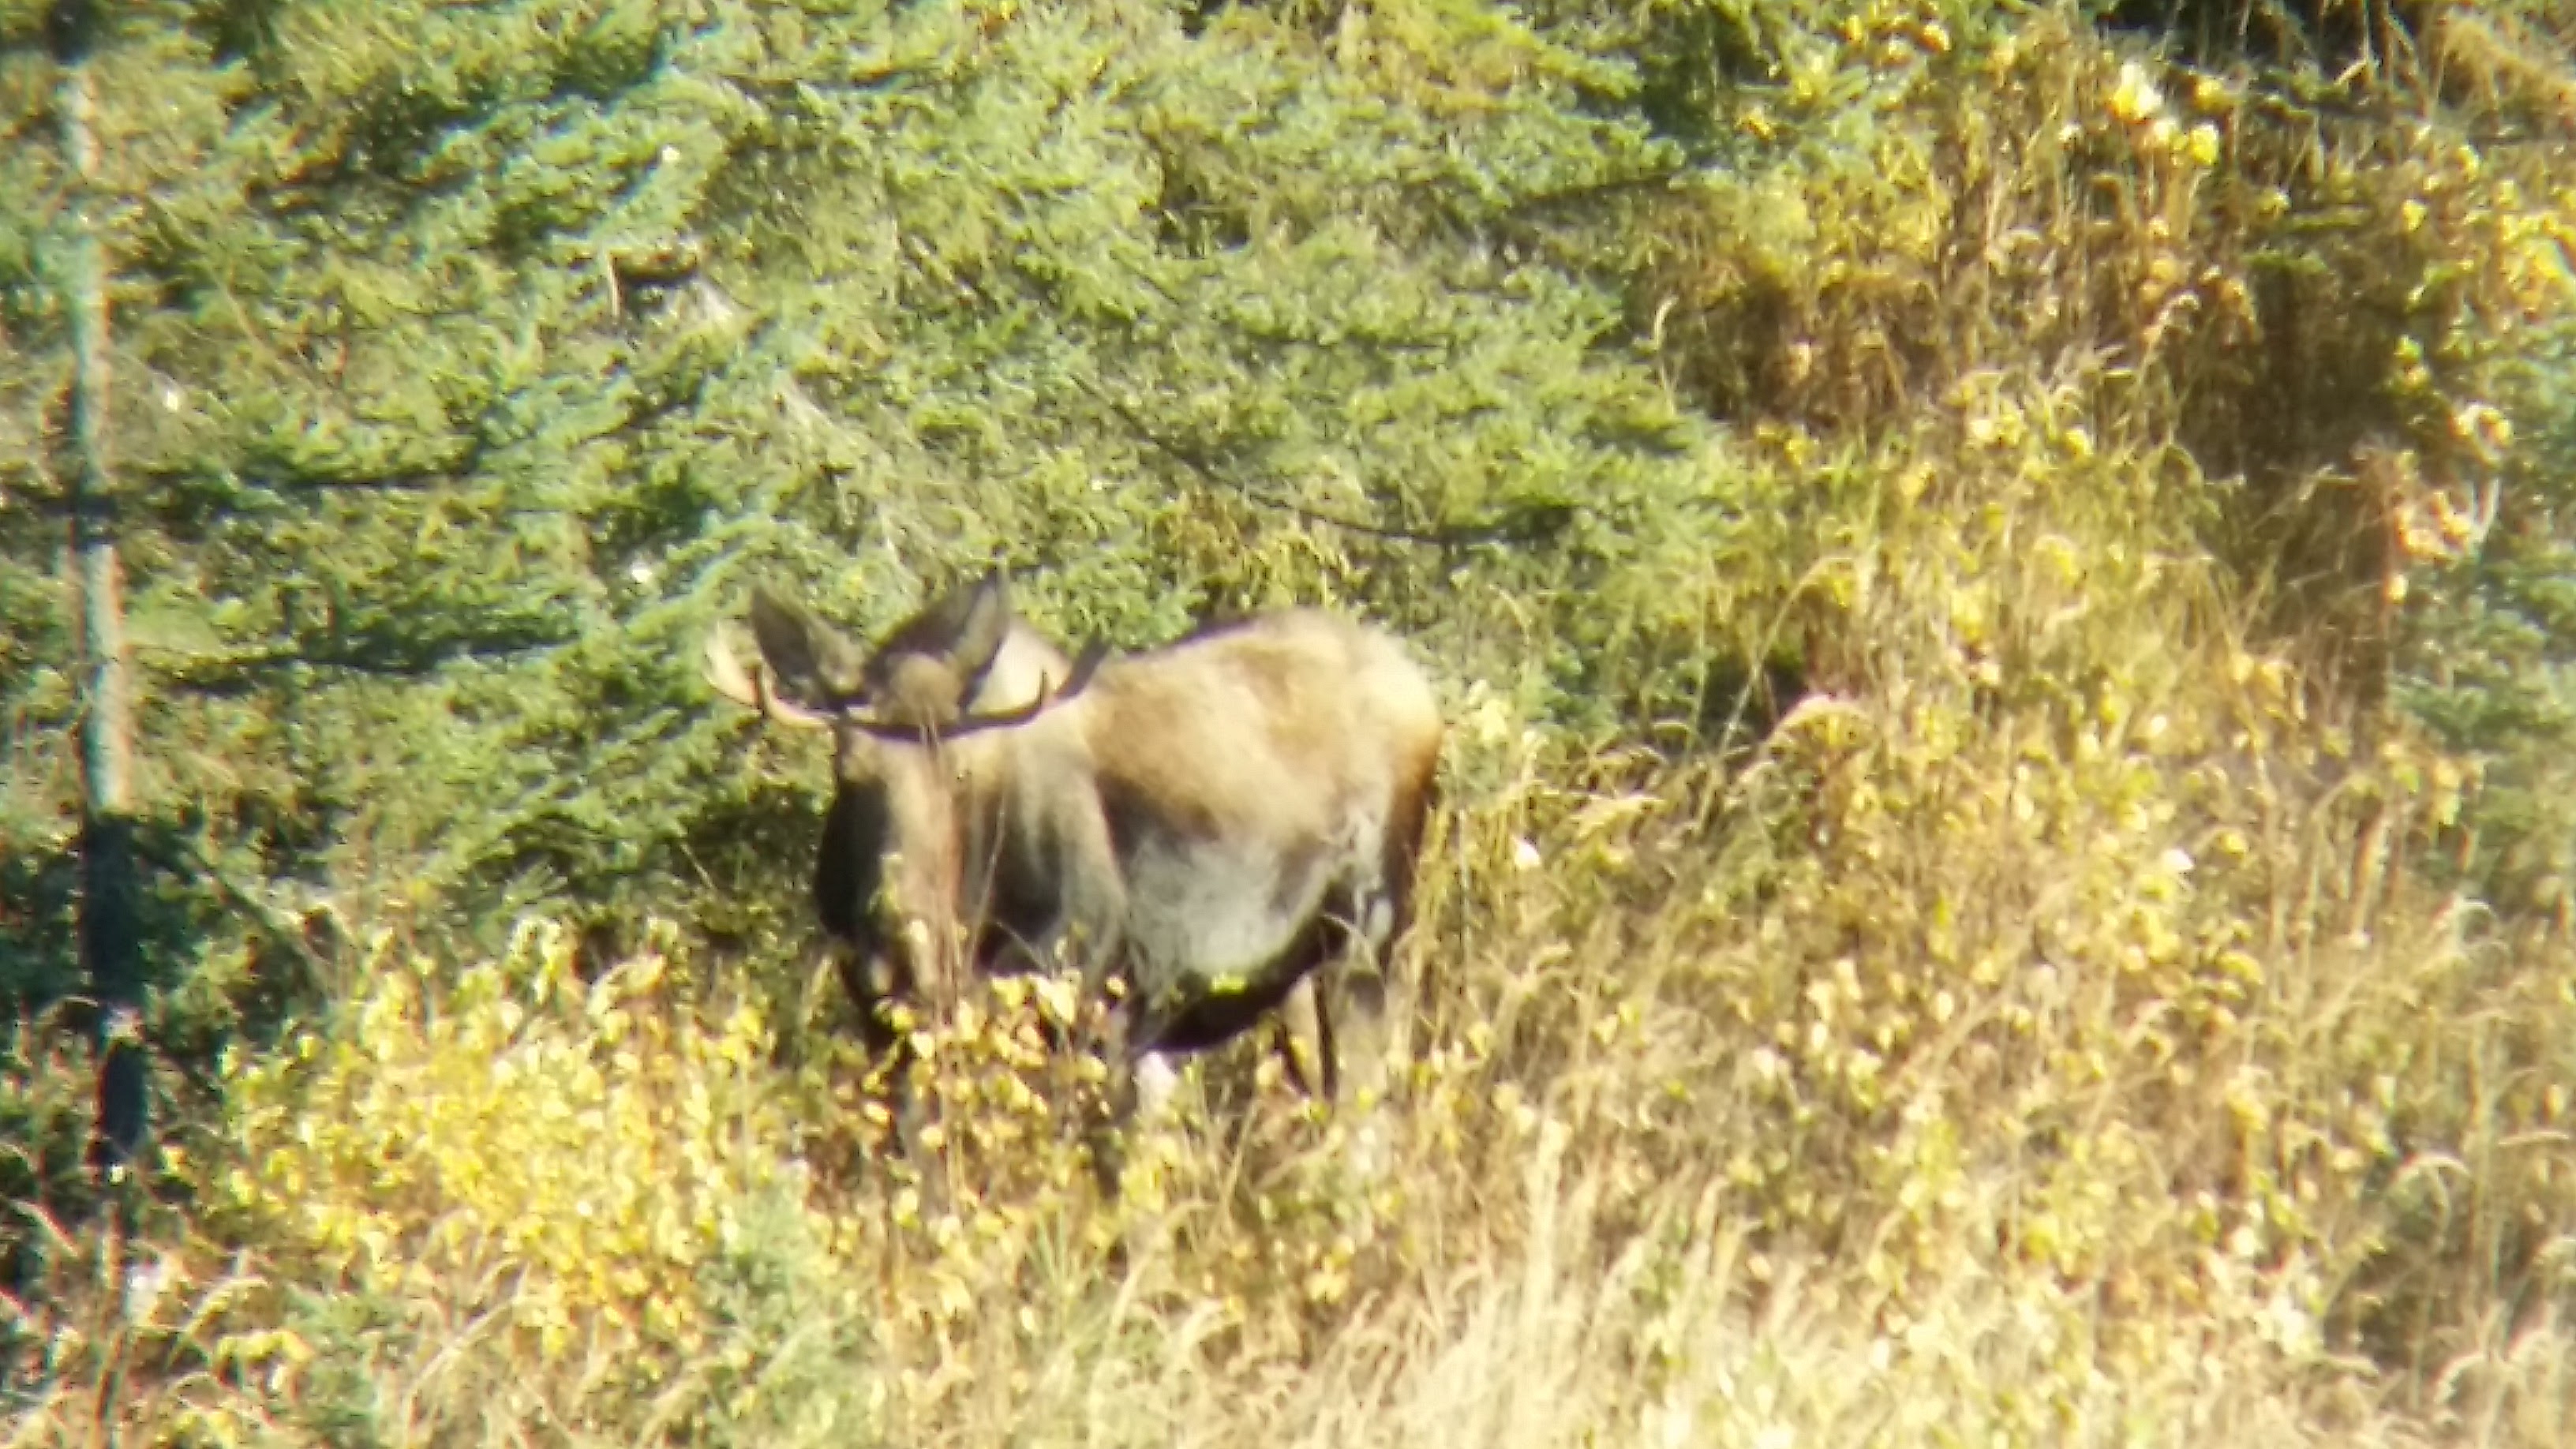 Young bull moose